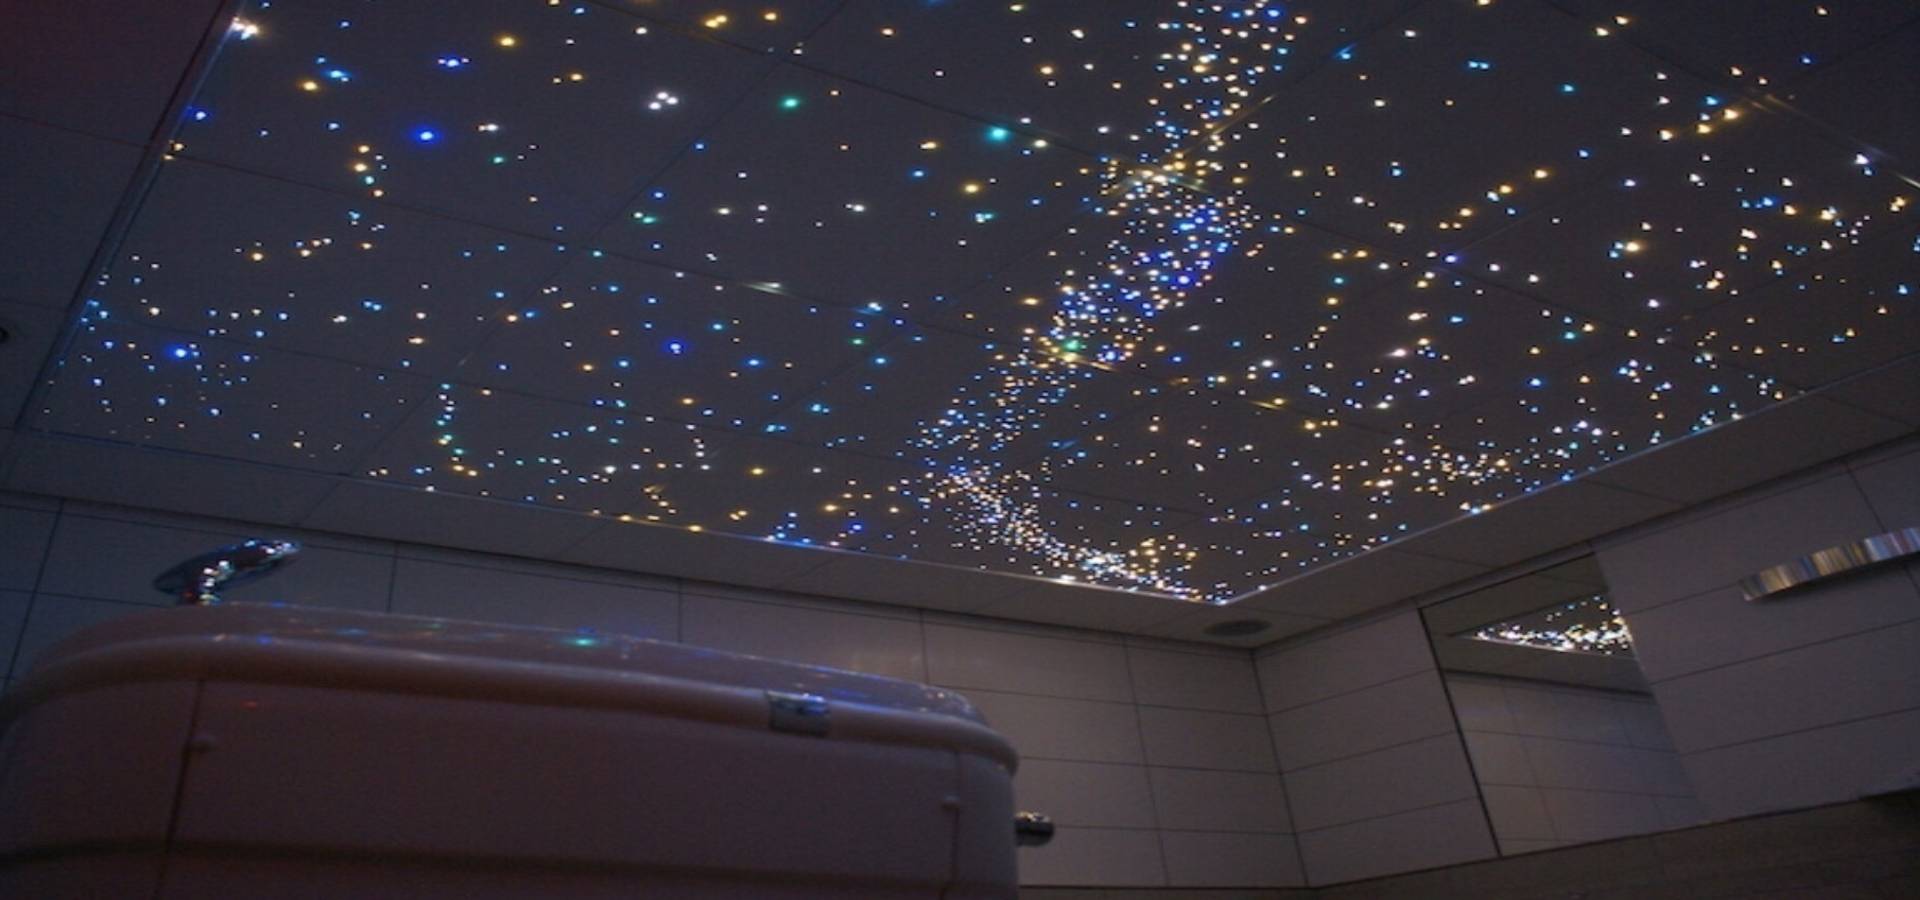 Fiber Optic Star Ceiling Lights For The Bathroom Bedroom A